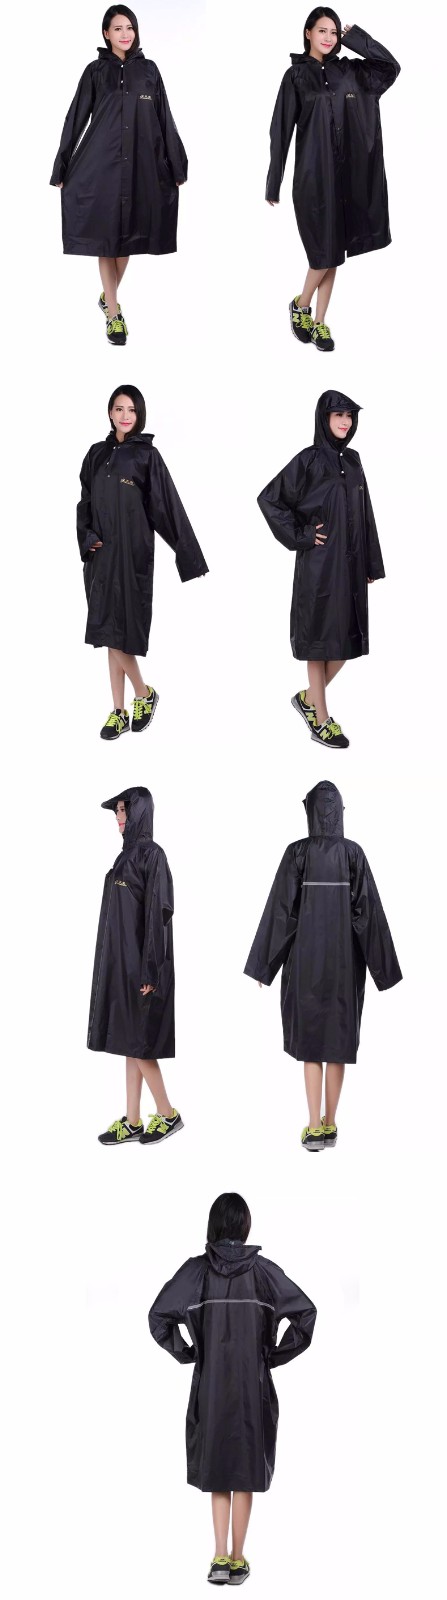 Adult-Outdooors-RainCoat-Long-Poncho-Hood-Thicker-Reflective-Types-Design-Work-Travel-Rainwear-1104682